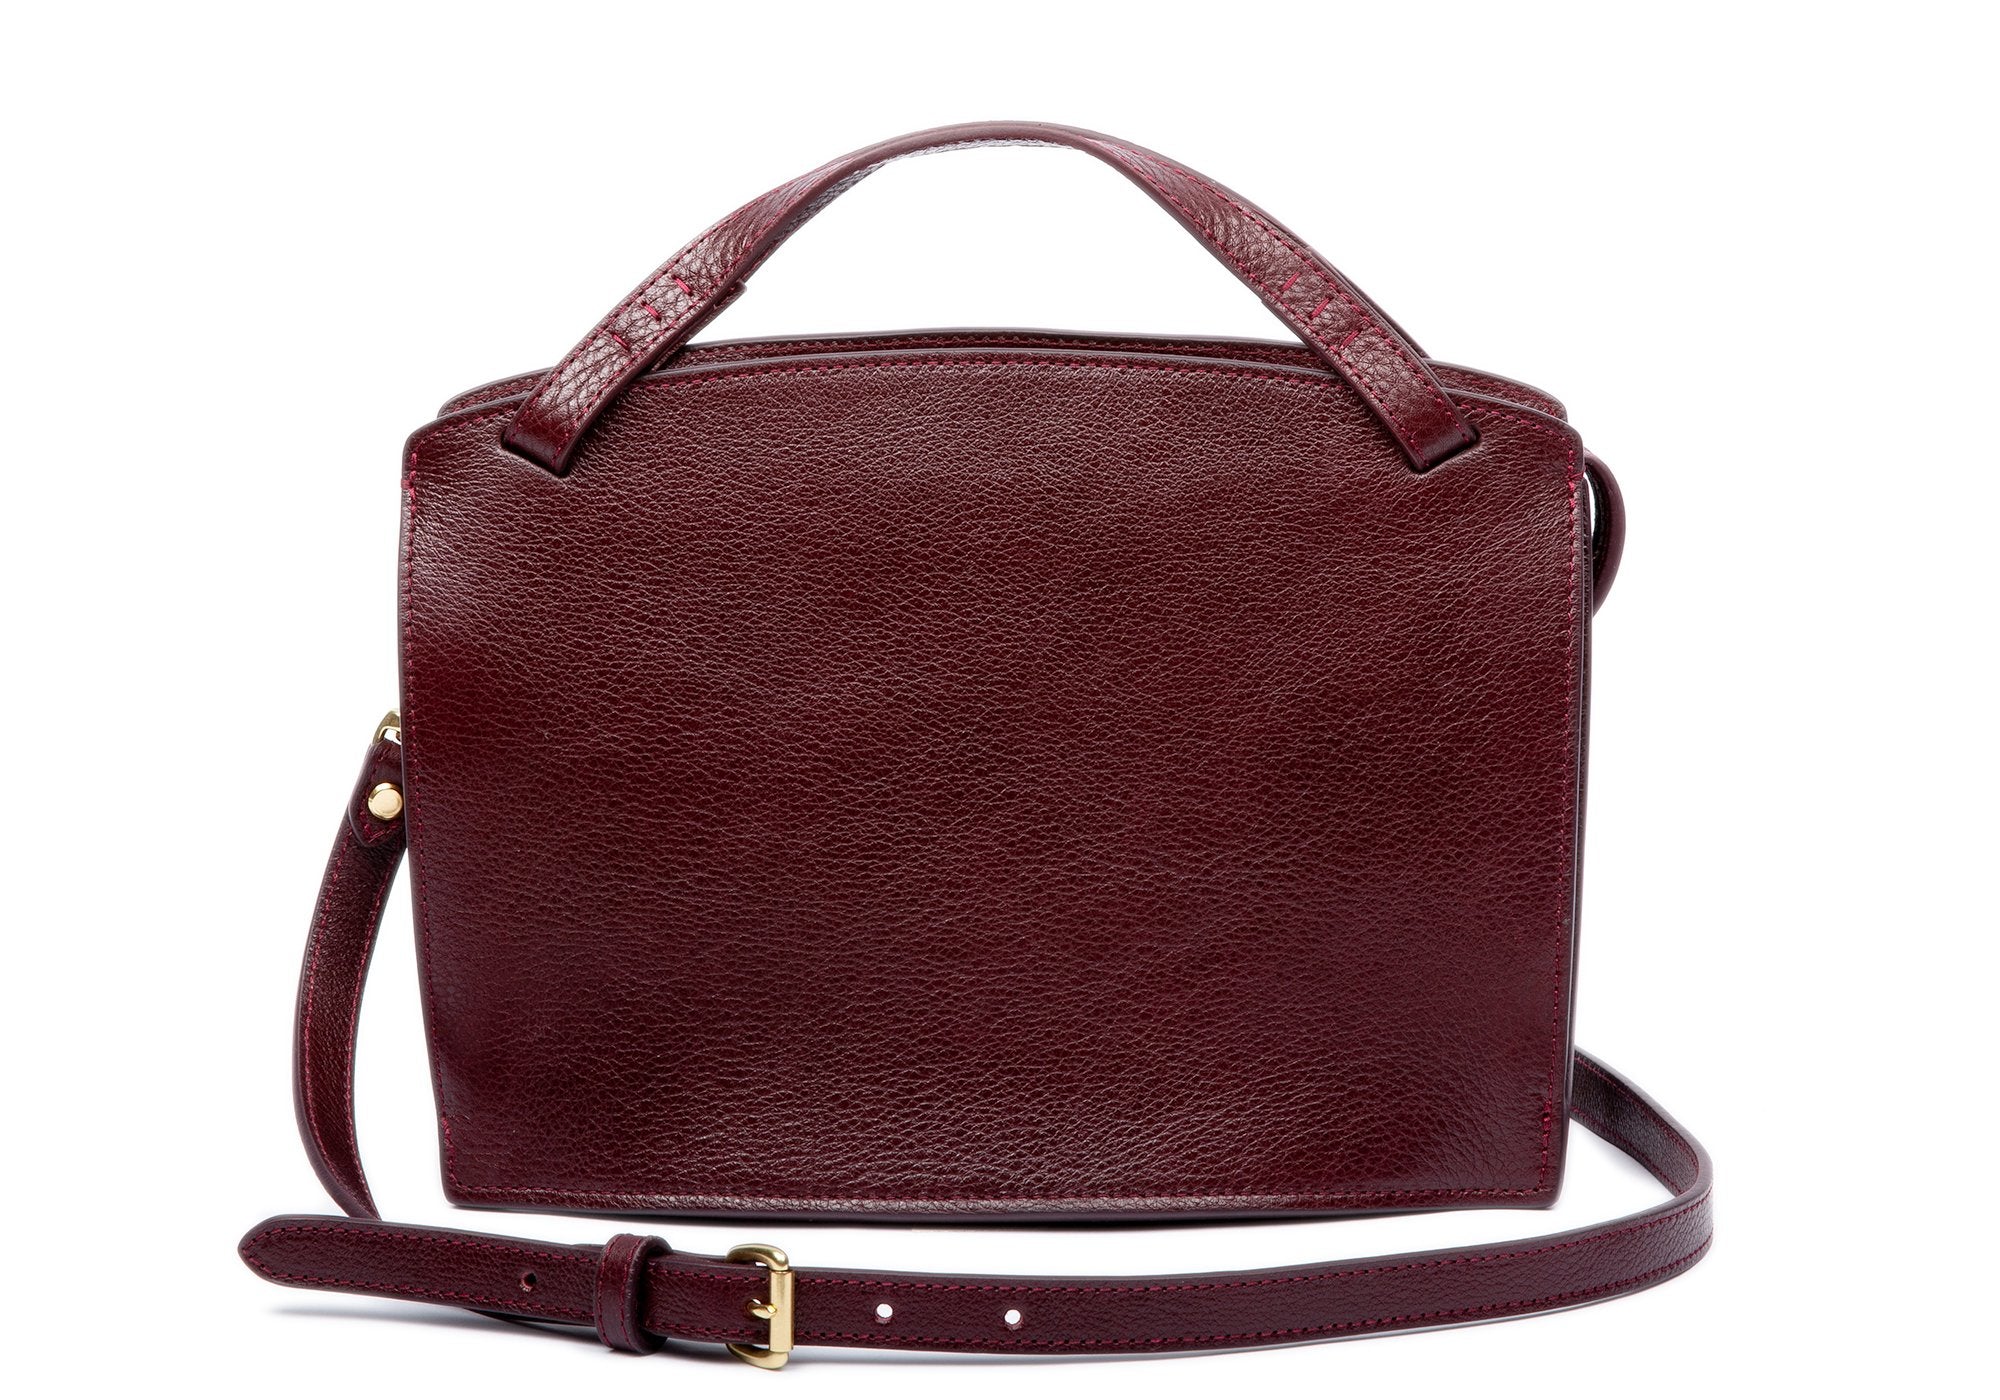 Buy BRAND LEATHER Women Leather Handbag Designer Top Handle Satchel  Shoulder Bag Crossbody (BLUE) at Amazon.in